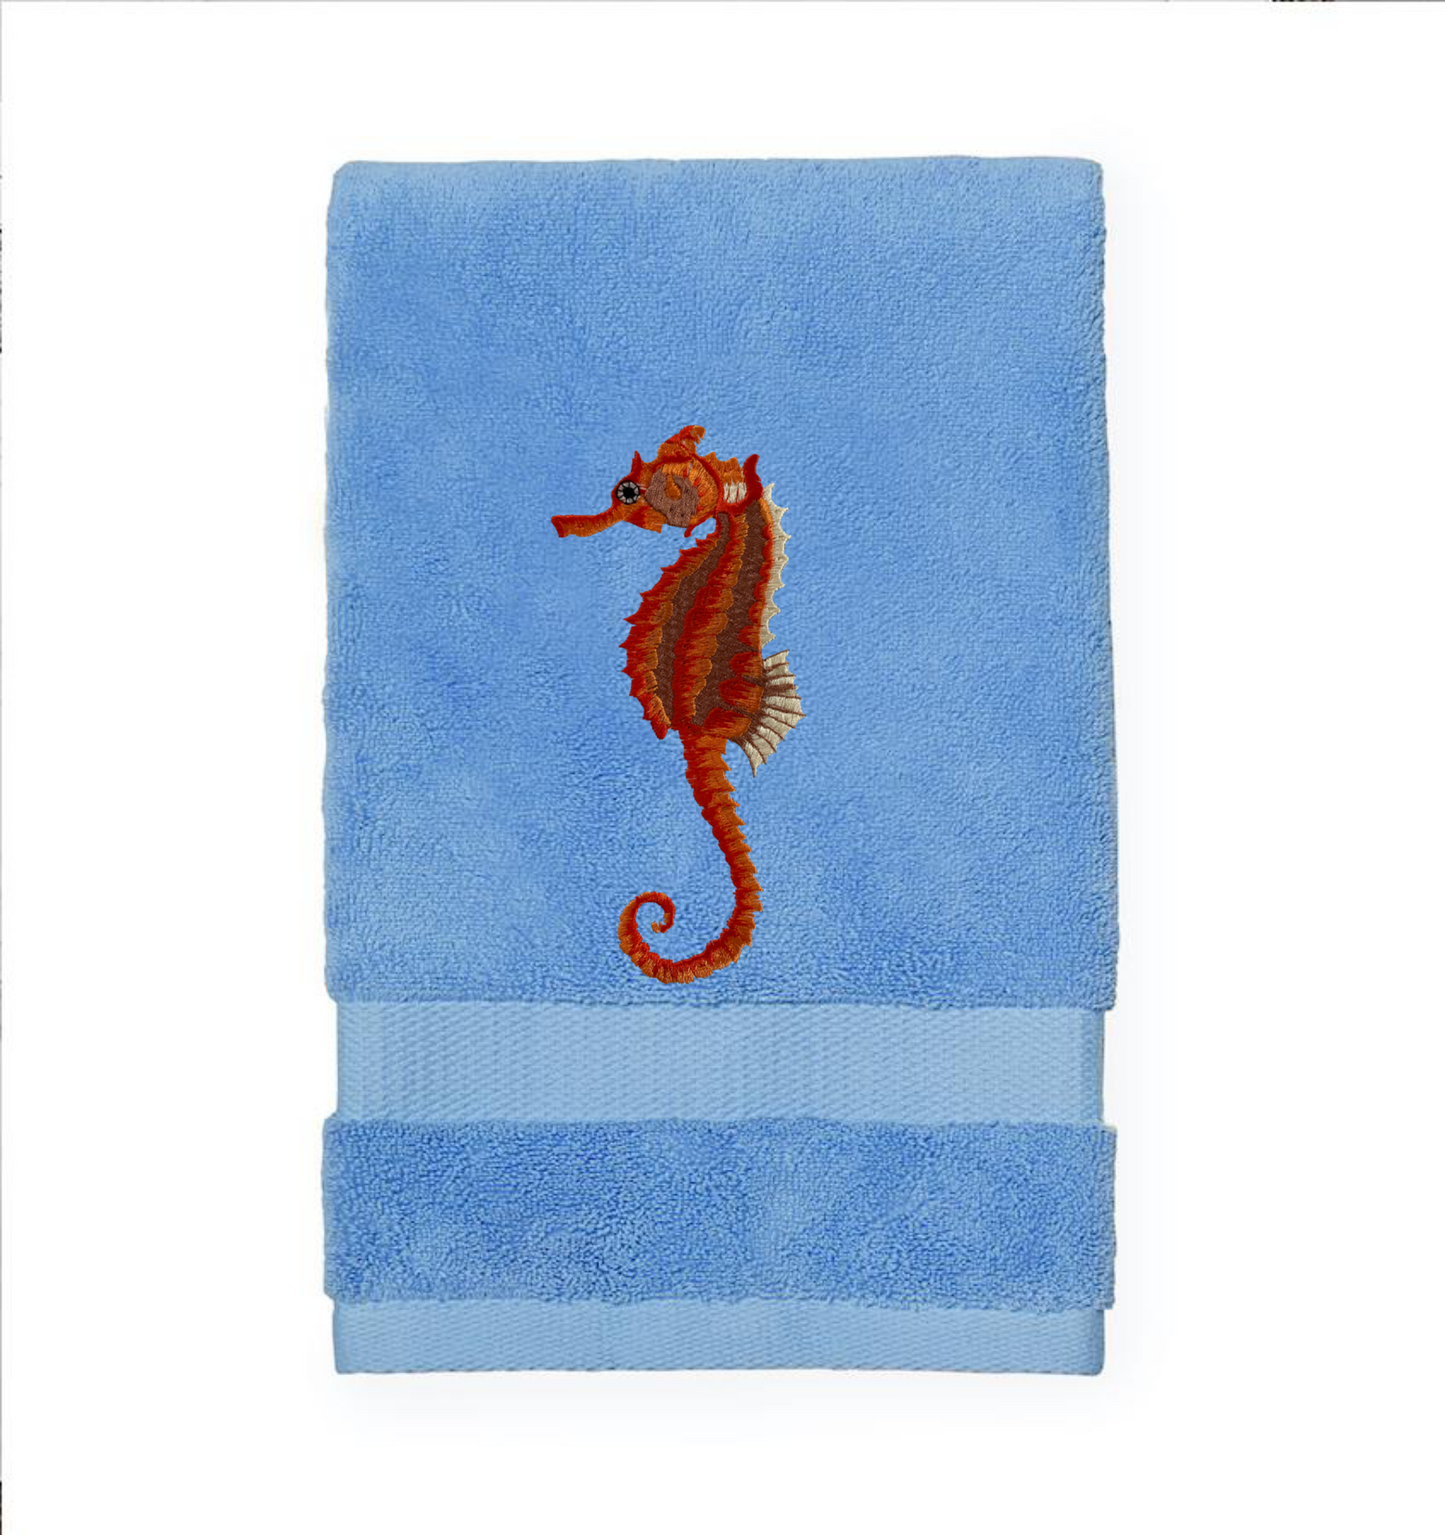 Seahorse Embroidered Bath Hand Towel. Beautifully Detailed Vibrant Orange Shades